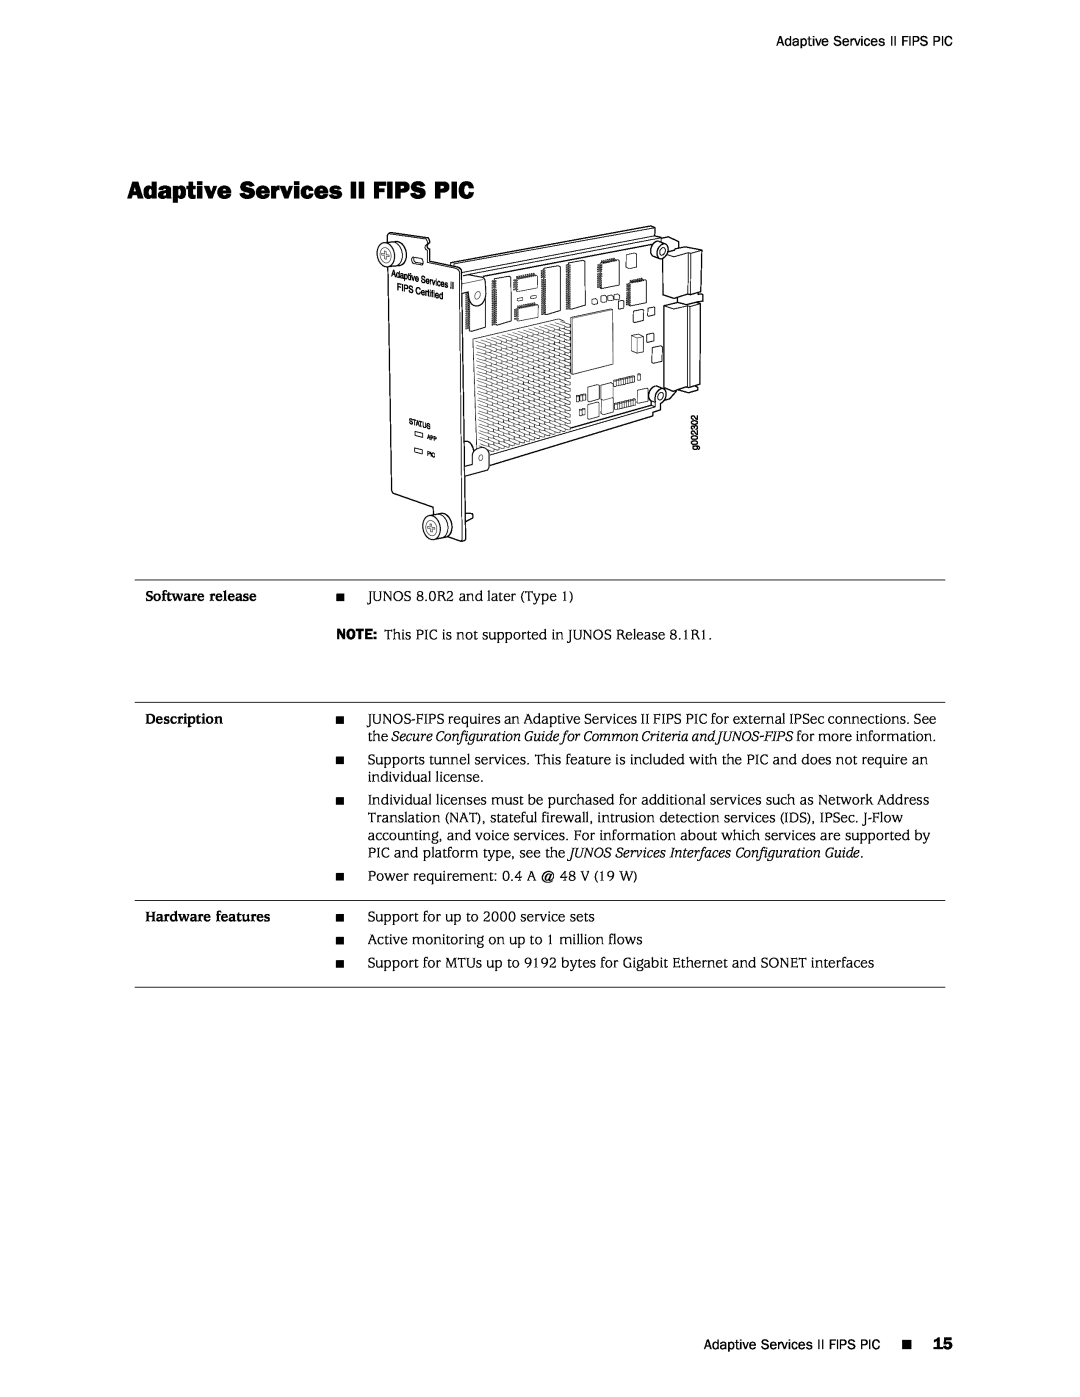 Juniper Networks M120 manual Adaptive Services II FIPS PIC 